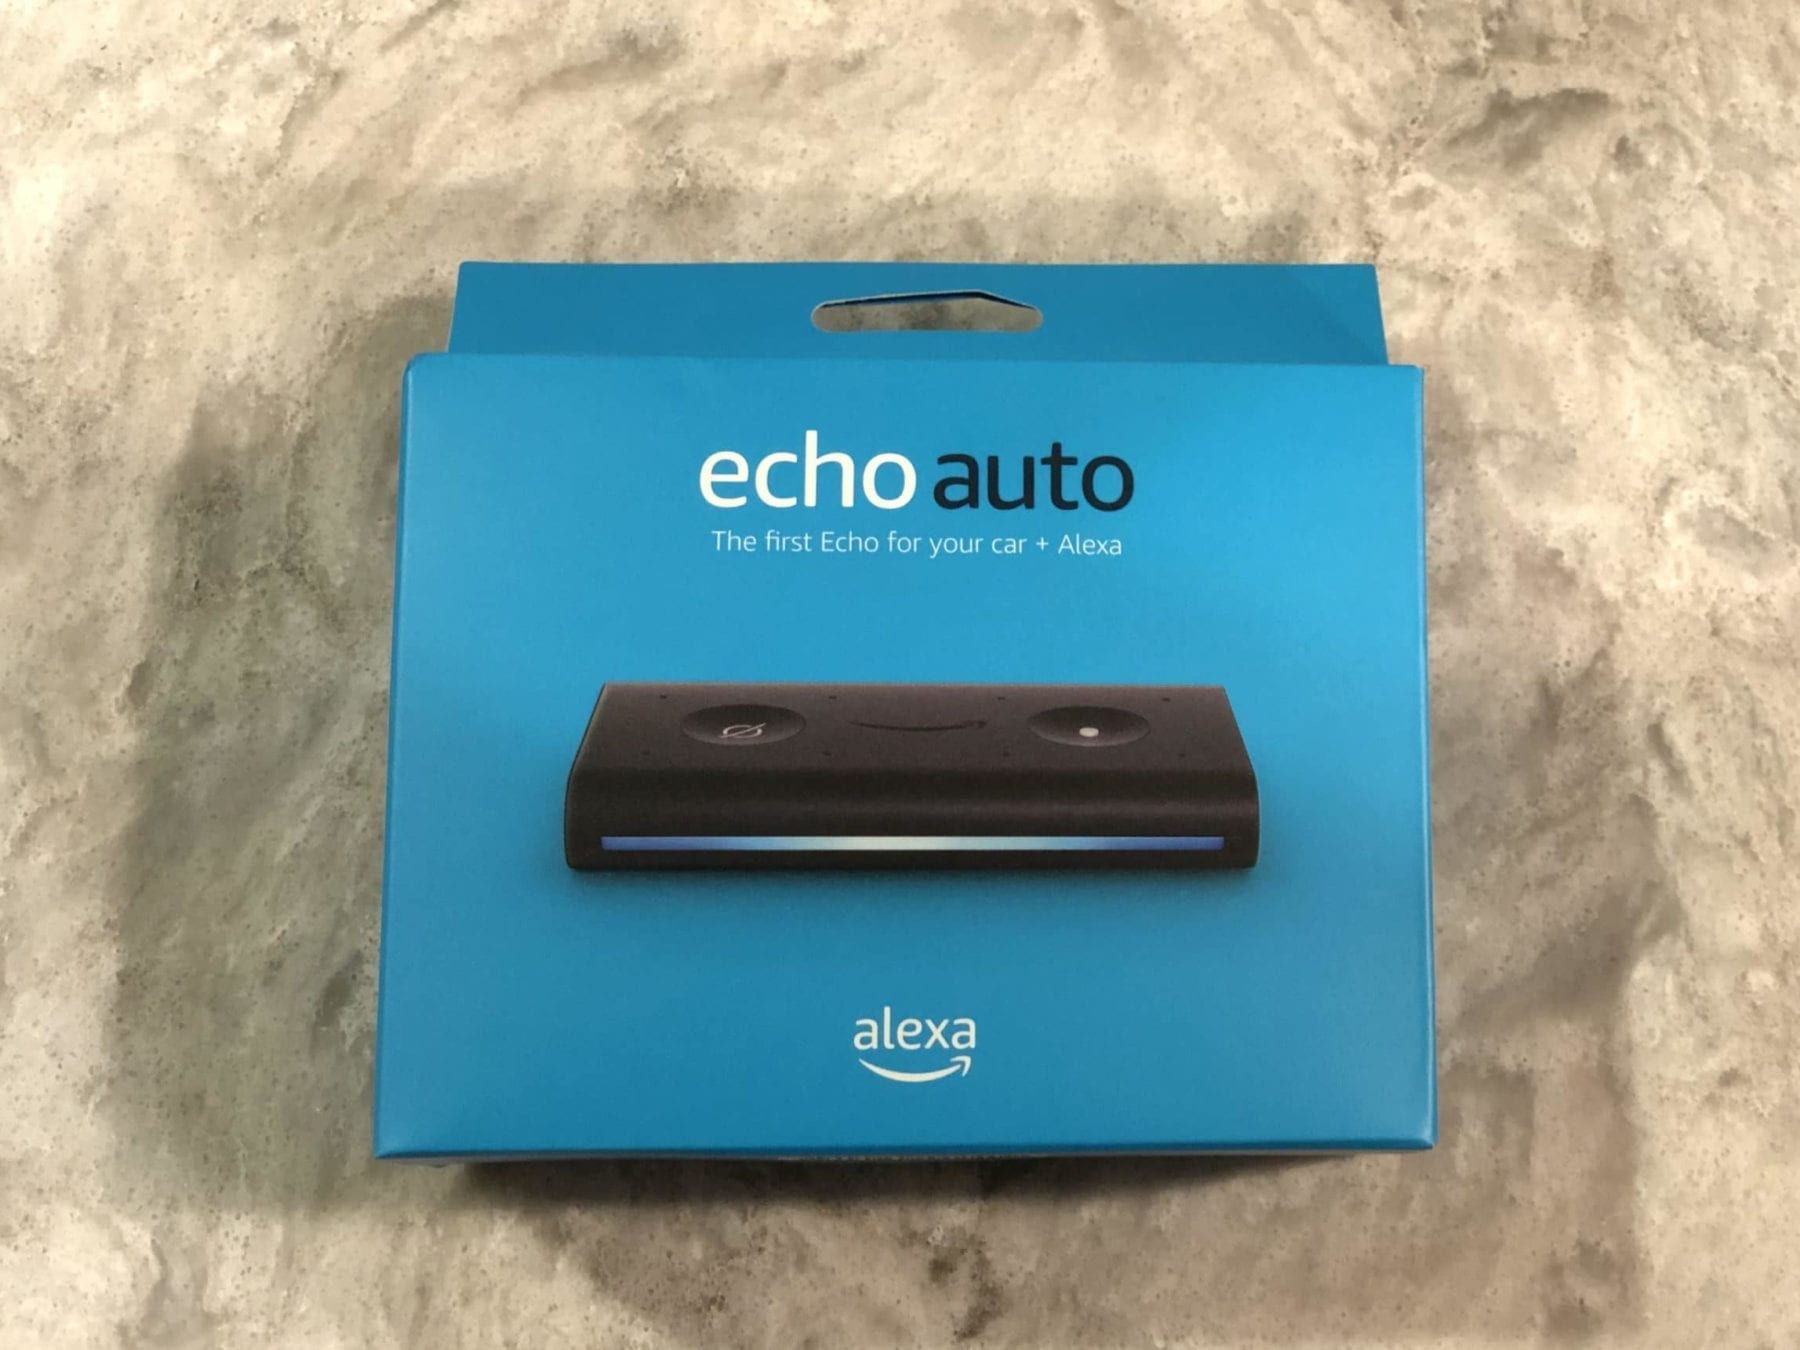 Echo Auto in original box before opening